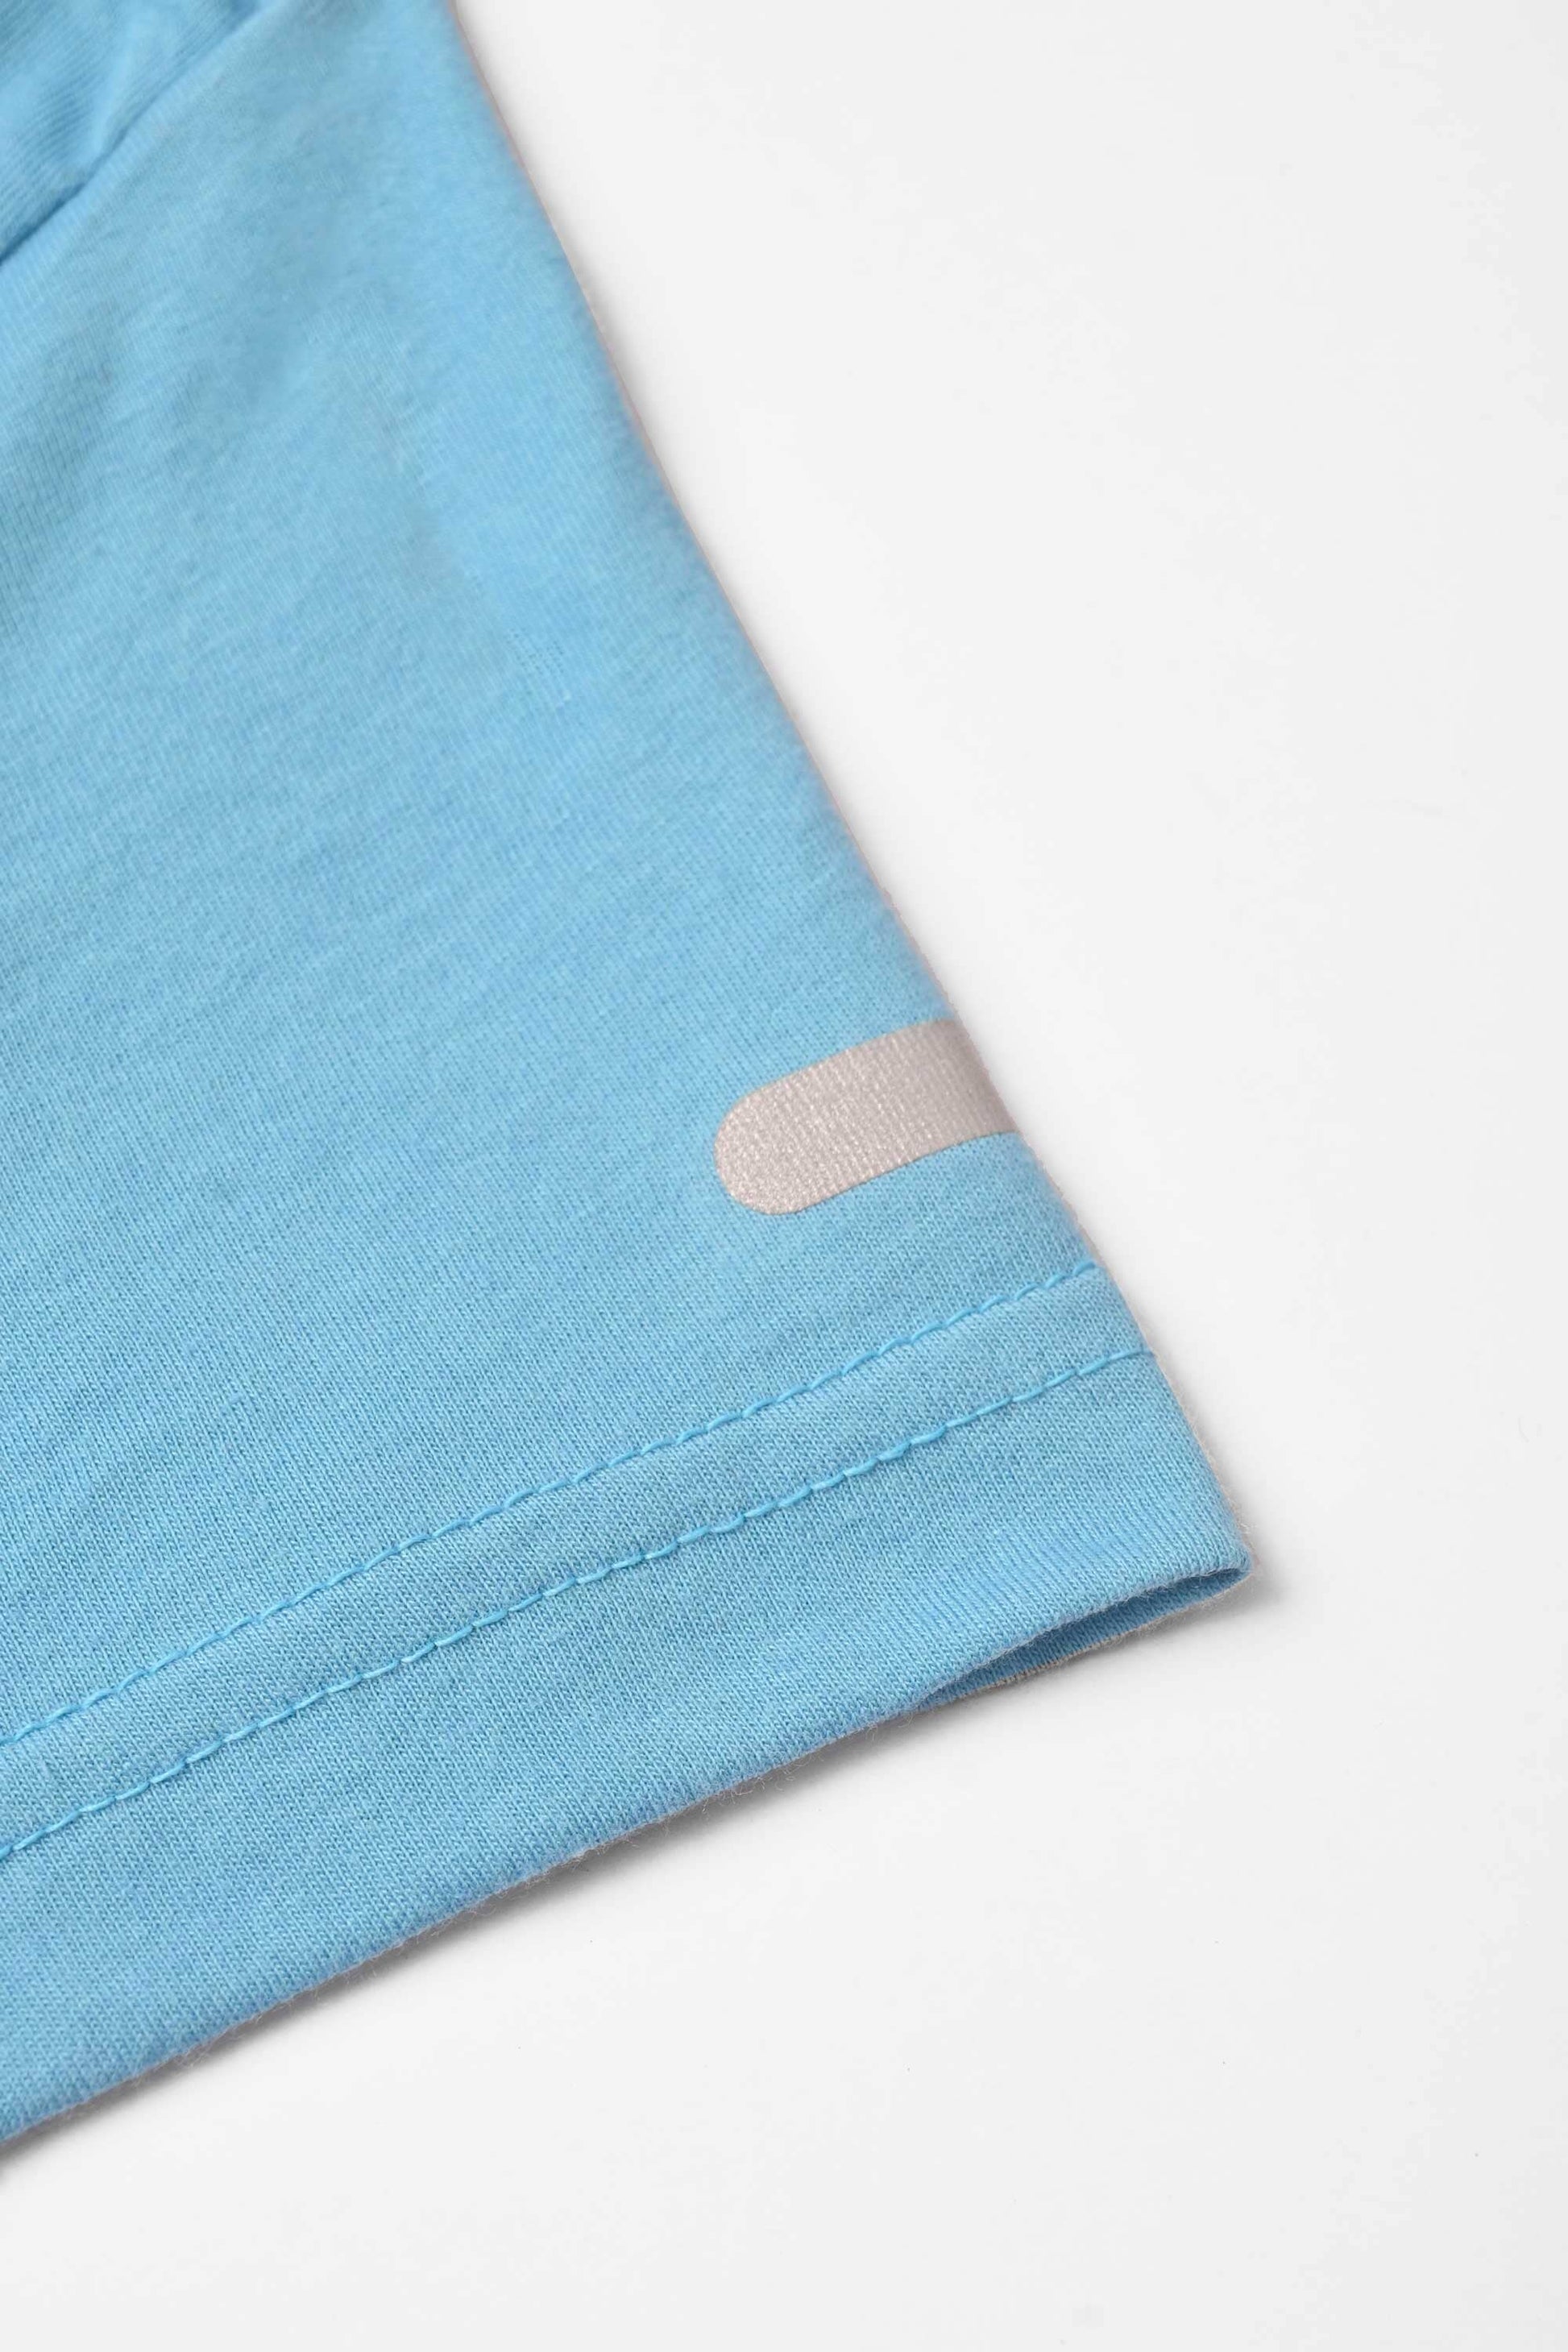 Polo Athletica Women's Activewear Logo Stripes Printed Short Sleeve Tee Shirt